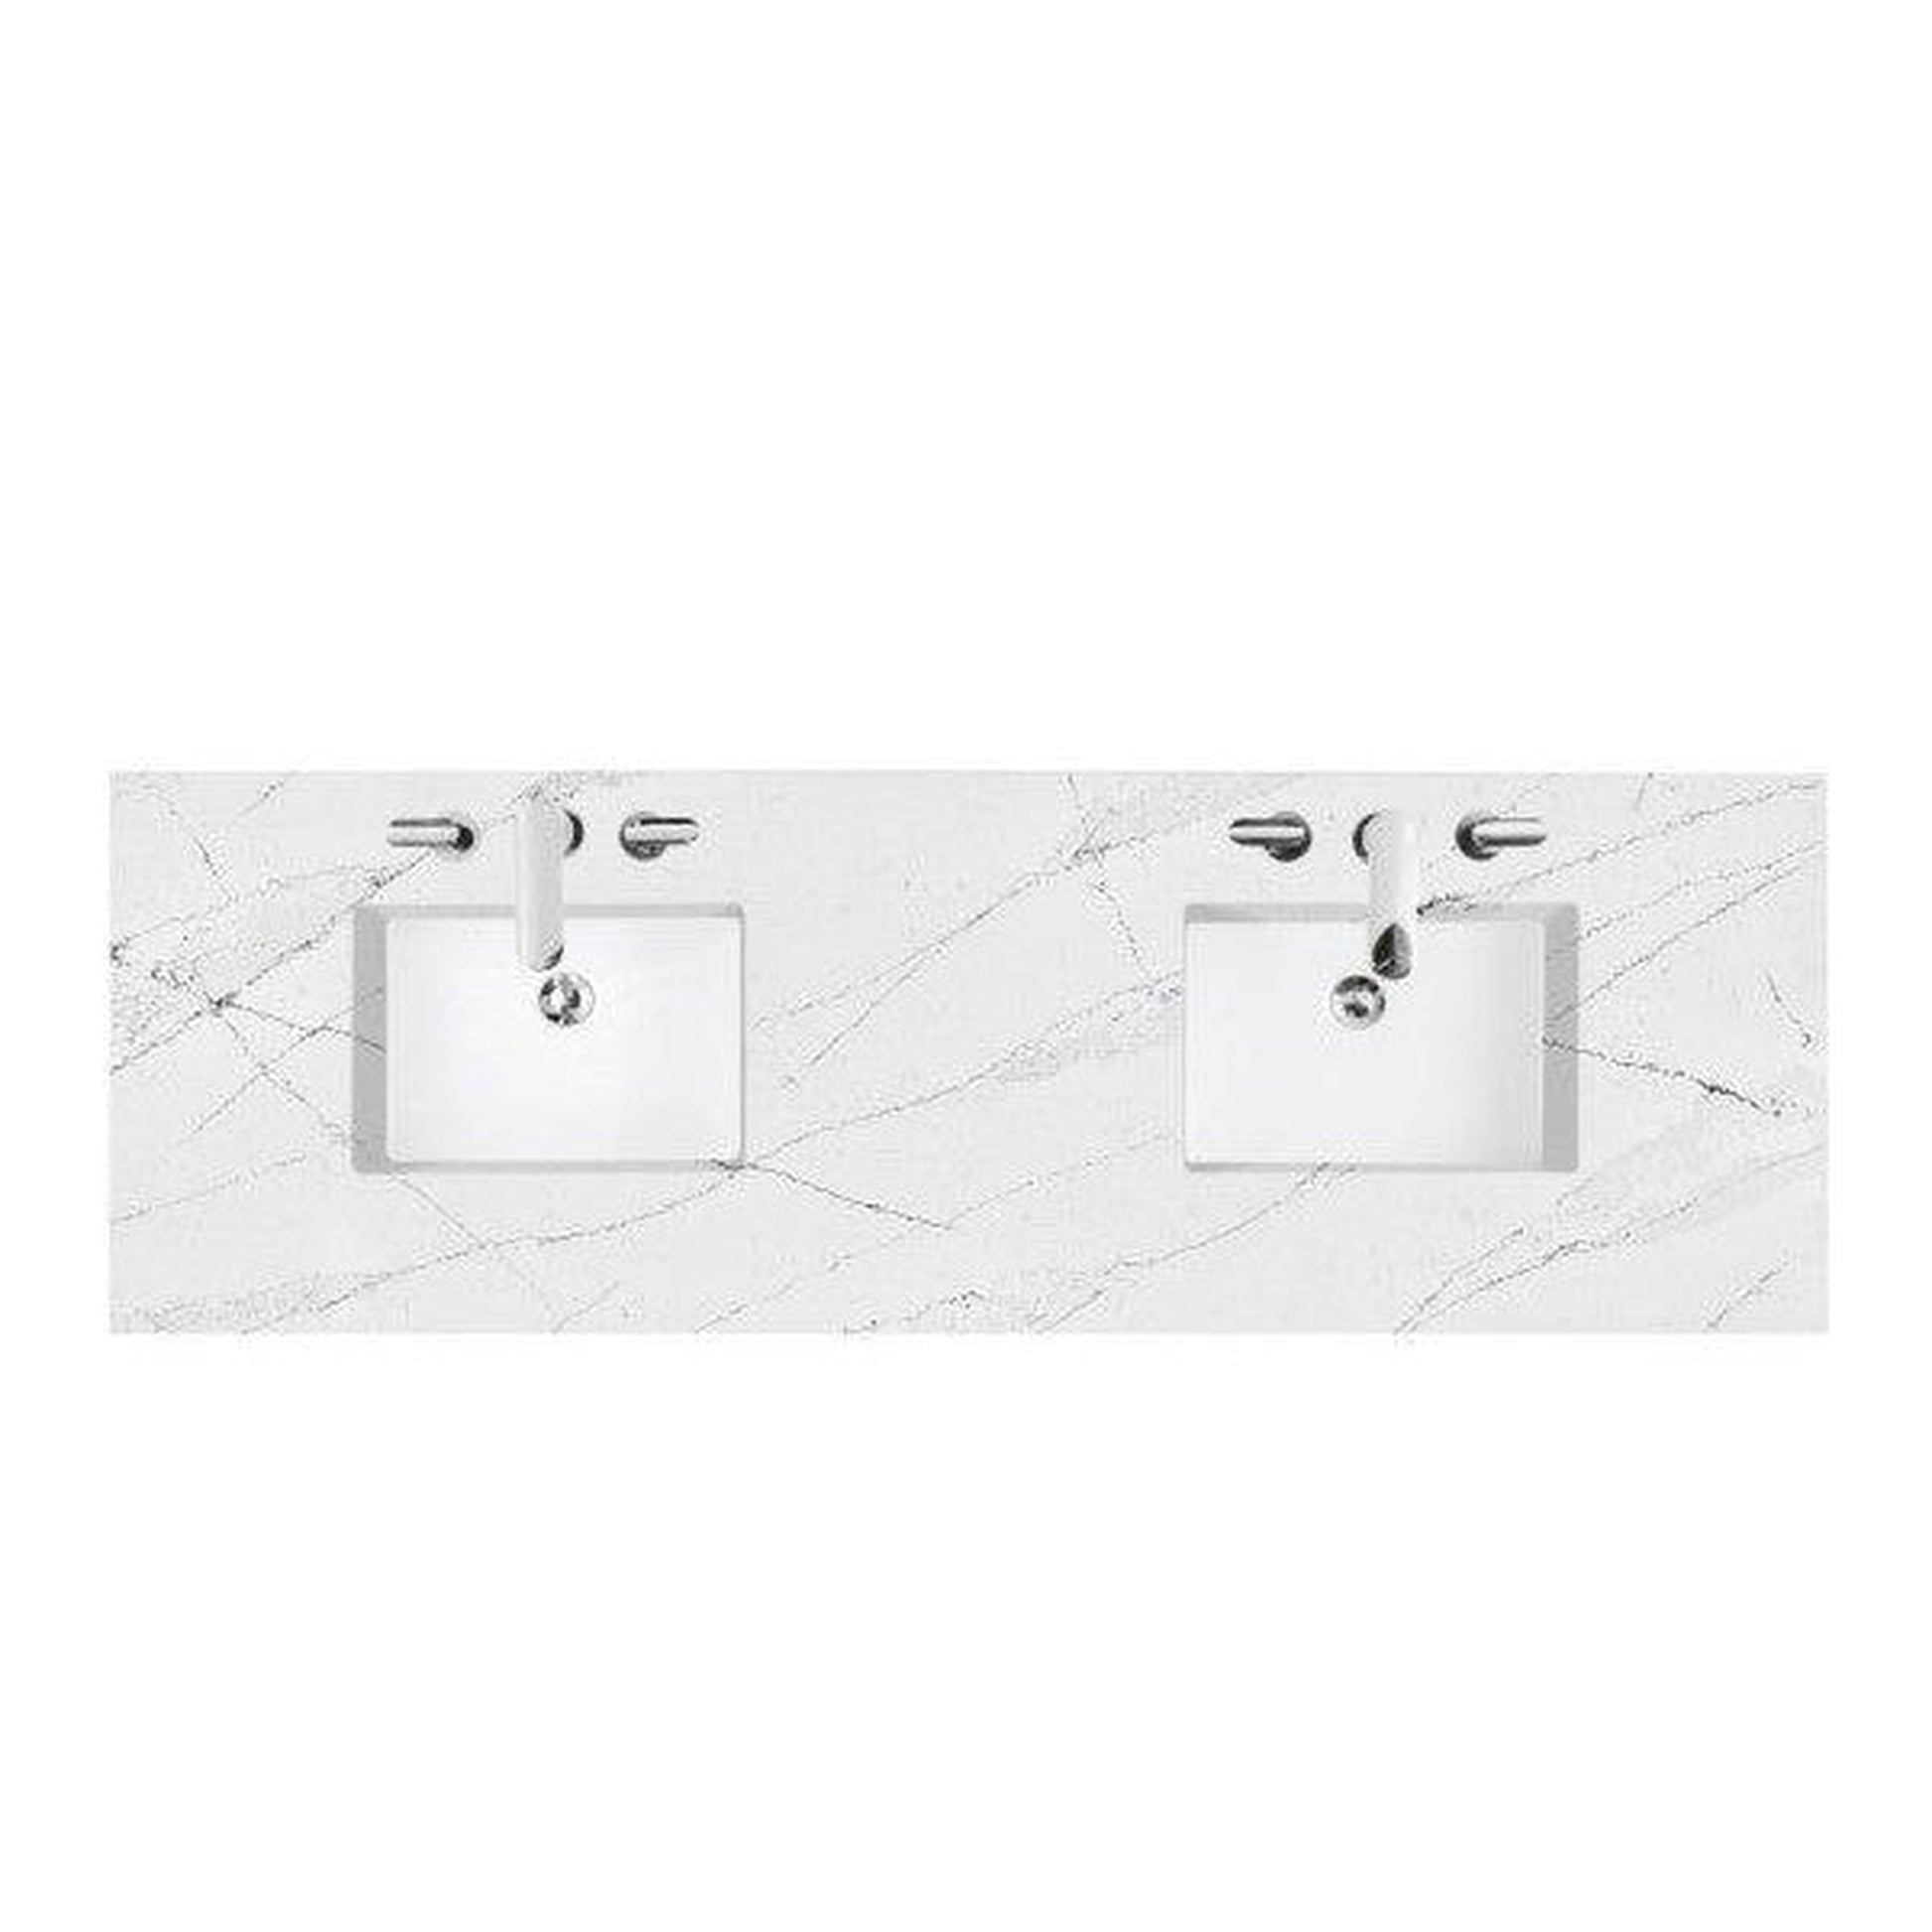 James Martin 72" x 24" Double Ethereal Noctis Quartz Bathroom Vanity Top With Rectangular Ceramic Sink